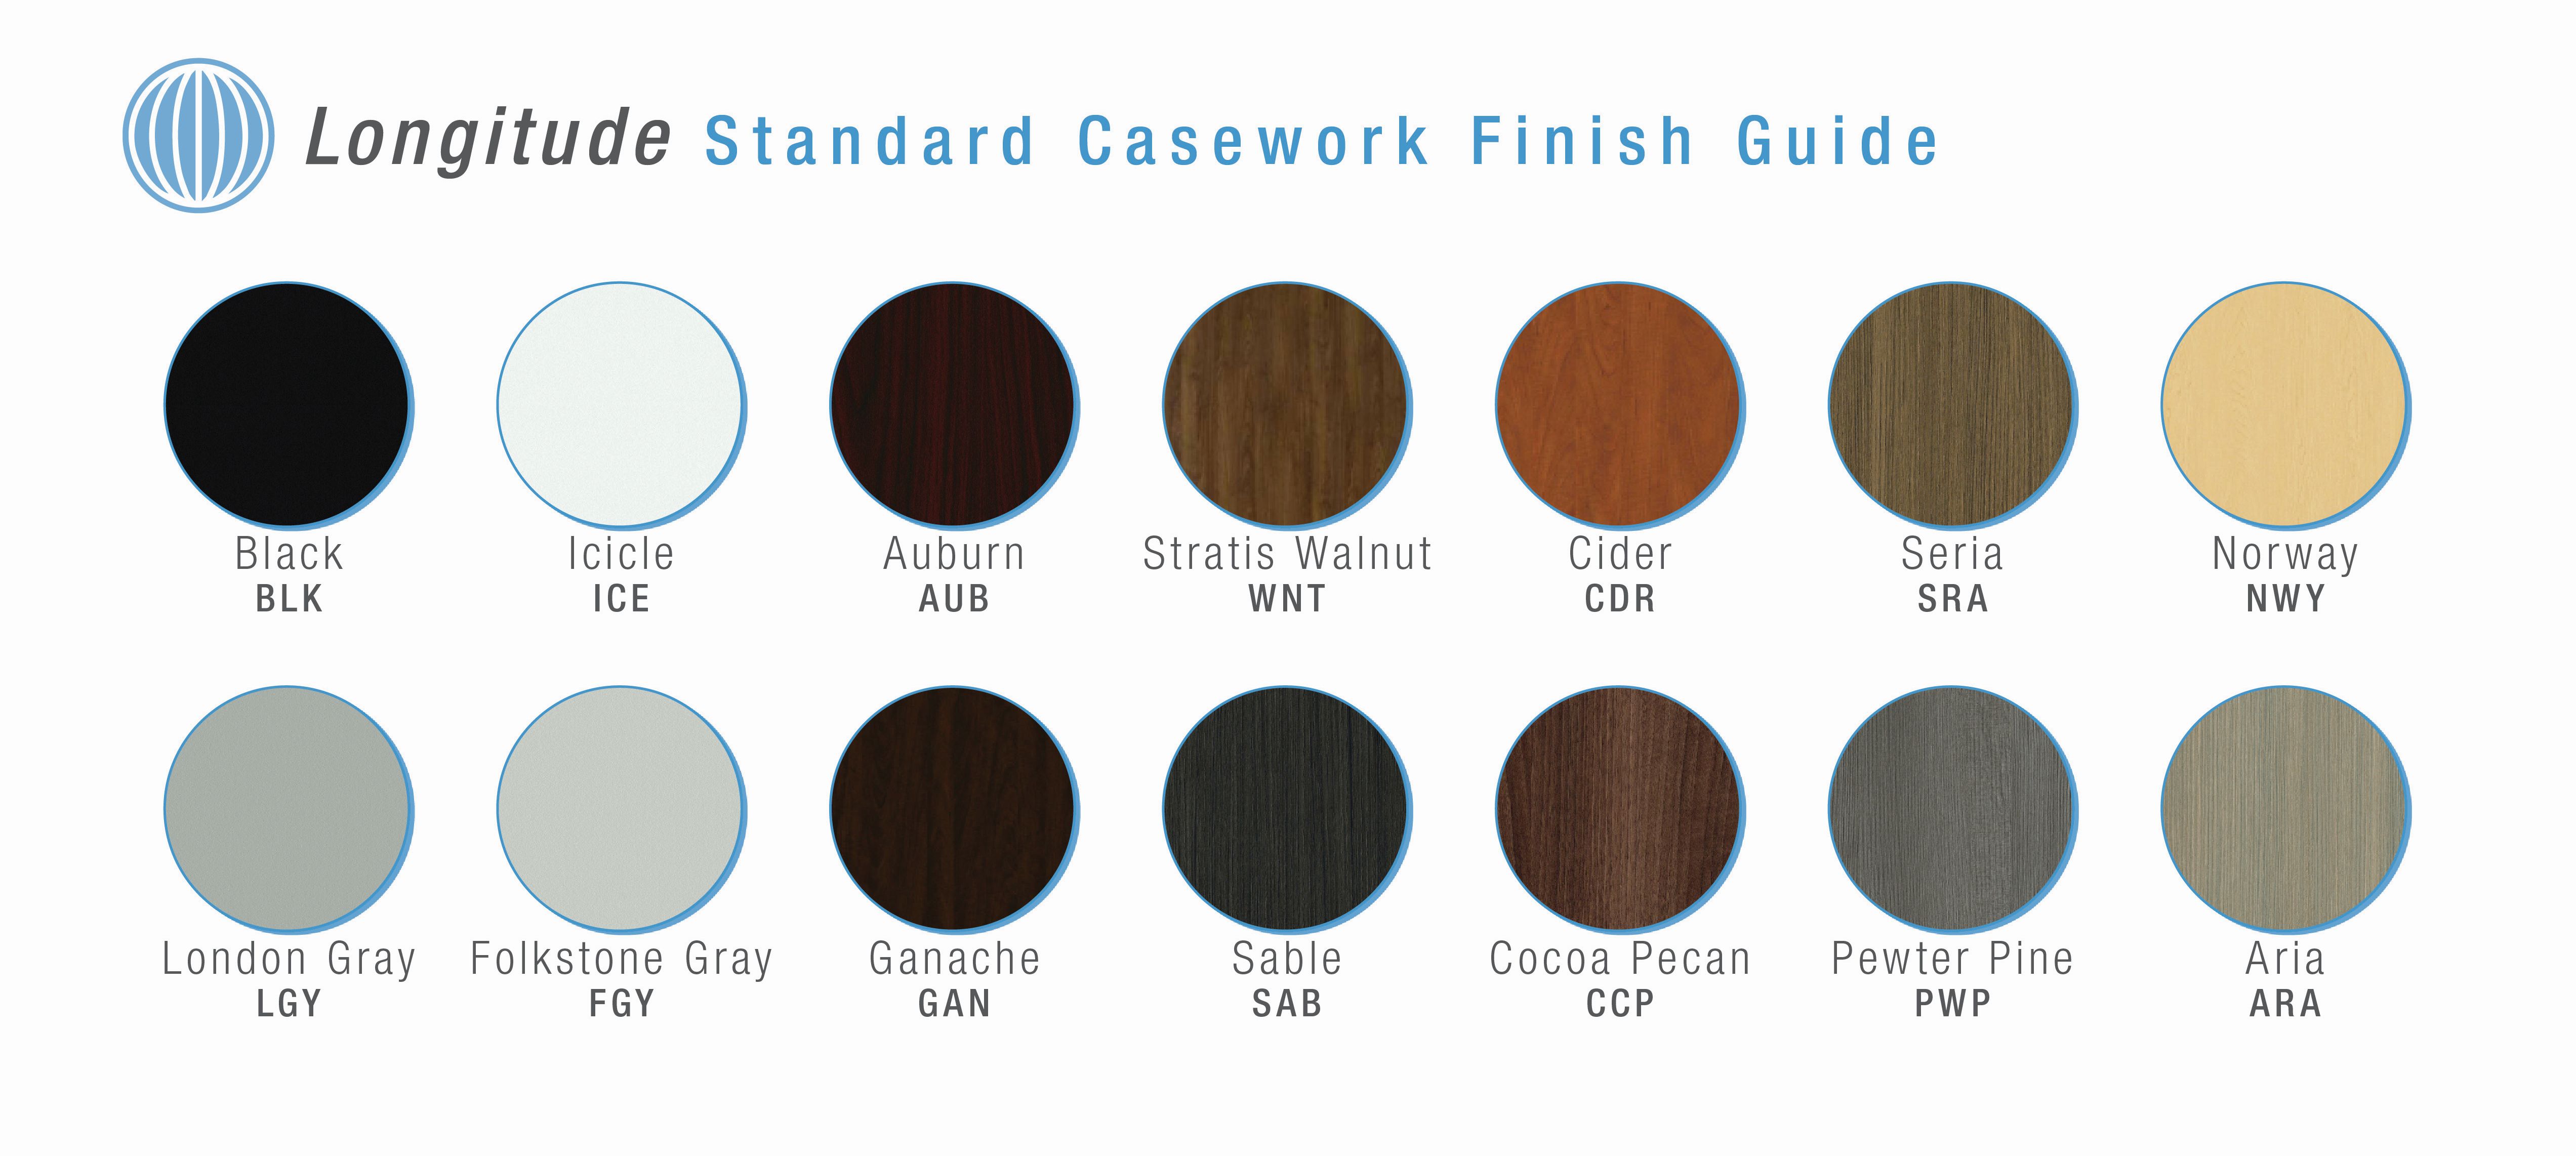 Longitude Standard Casework Finish Guide color Chart